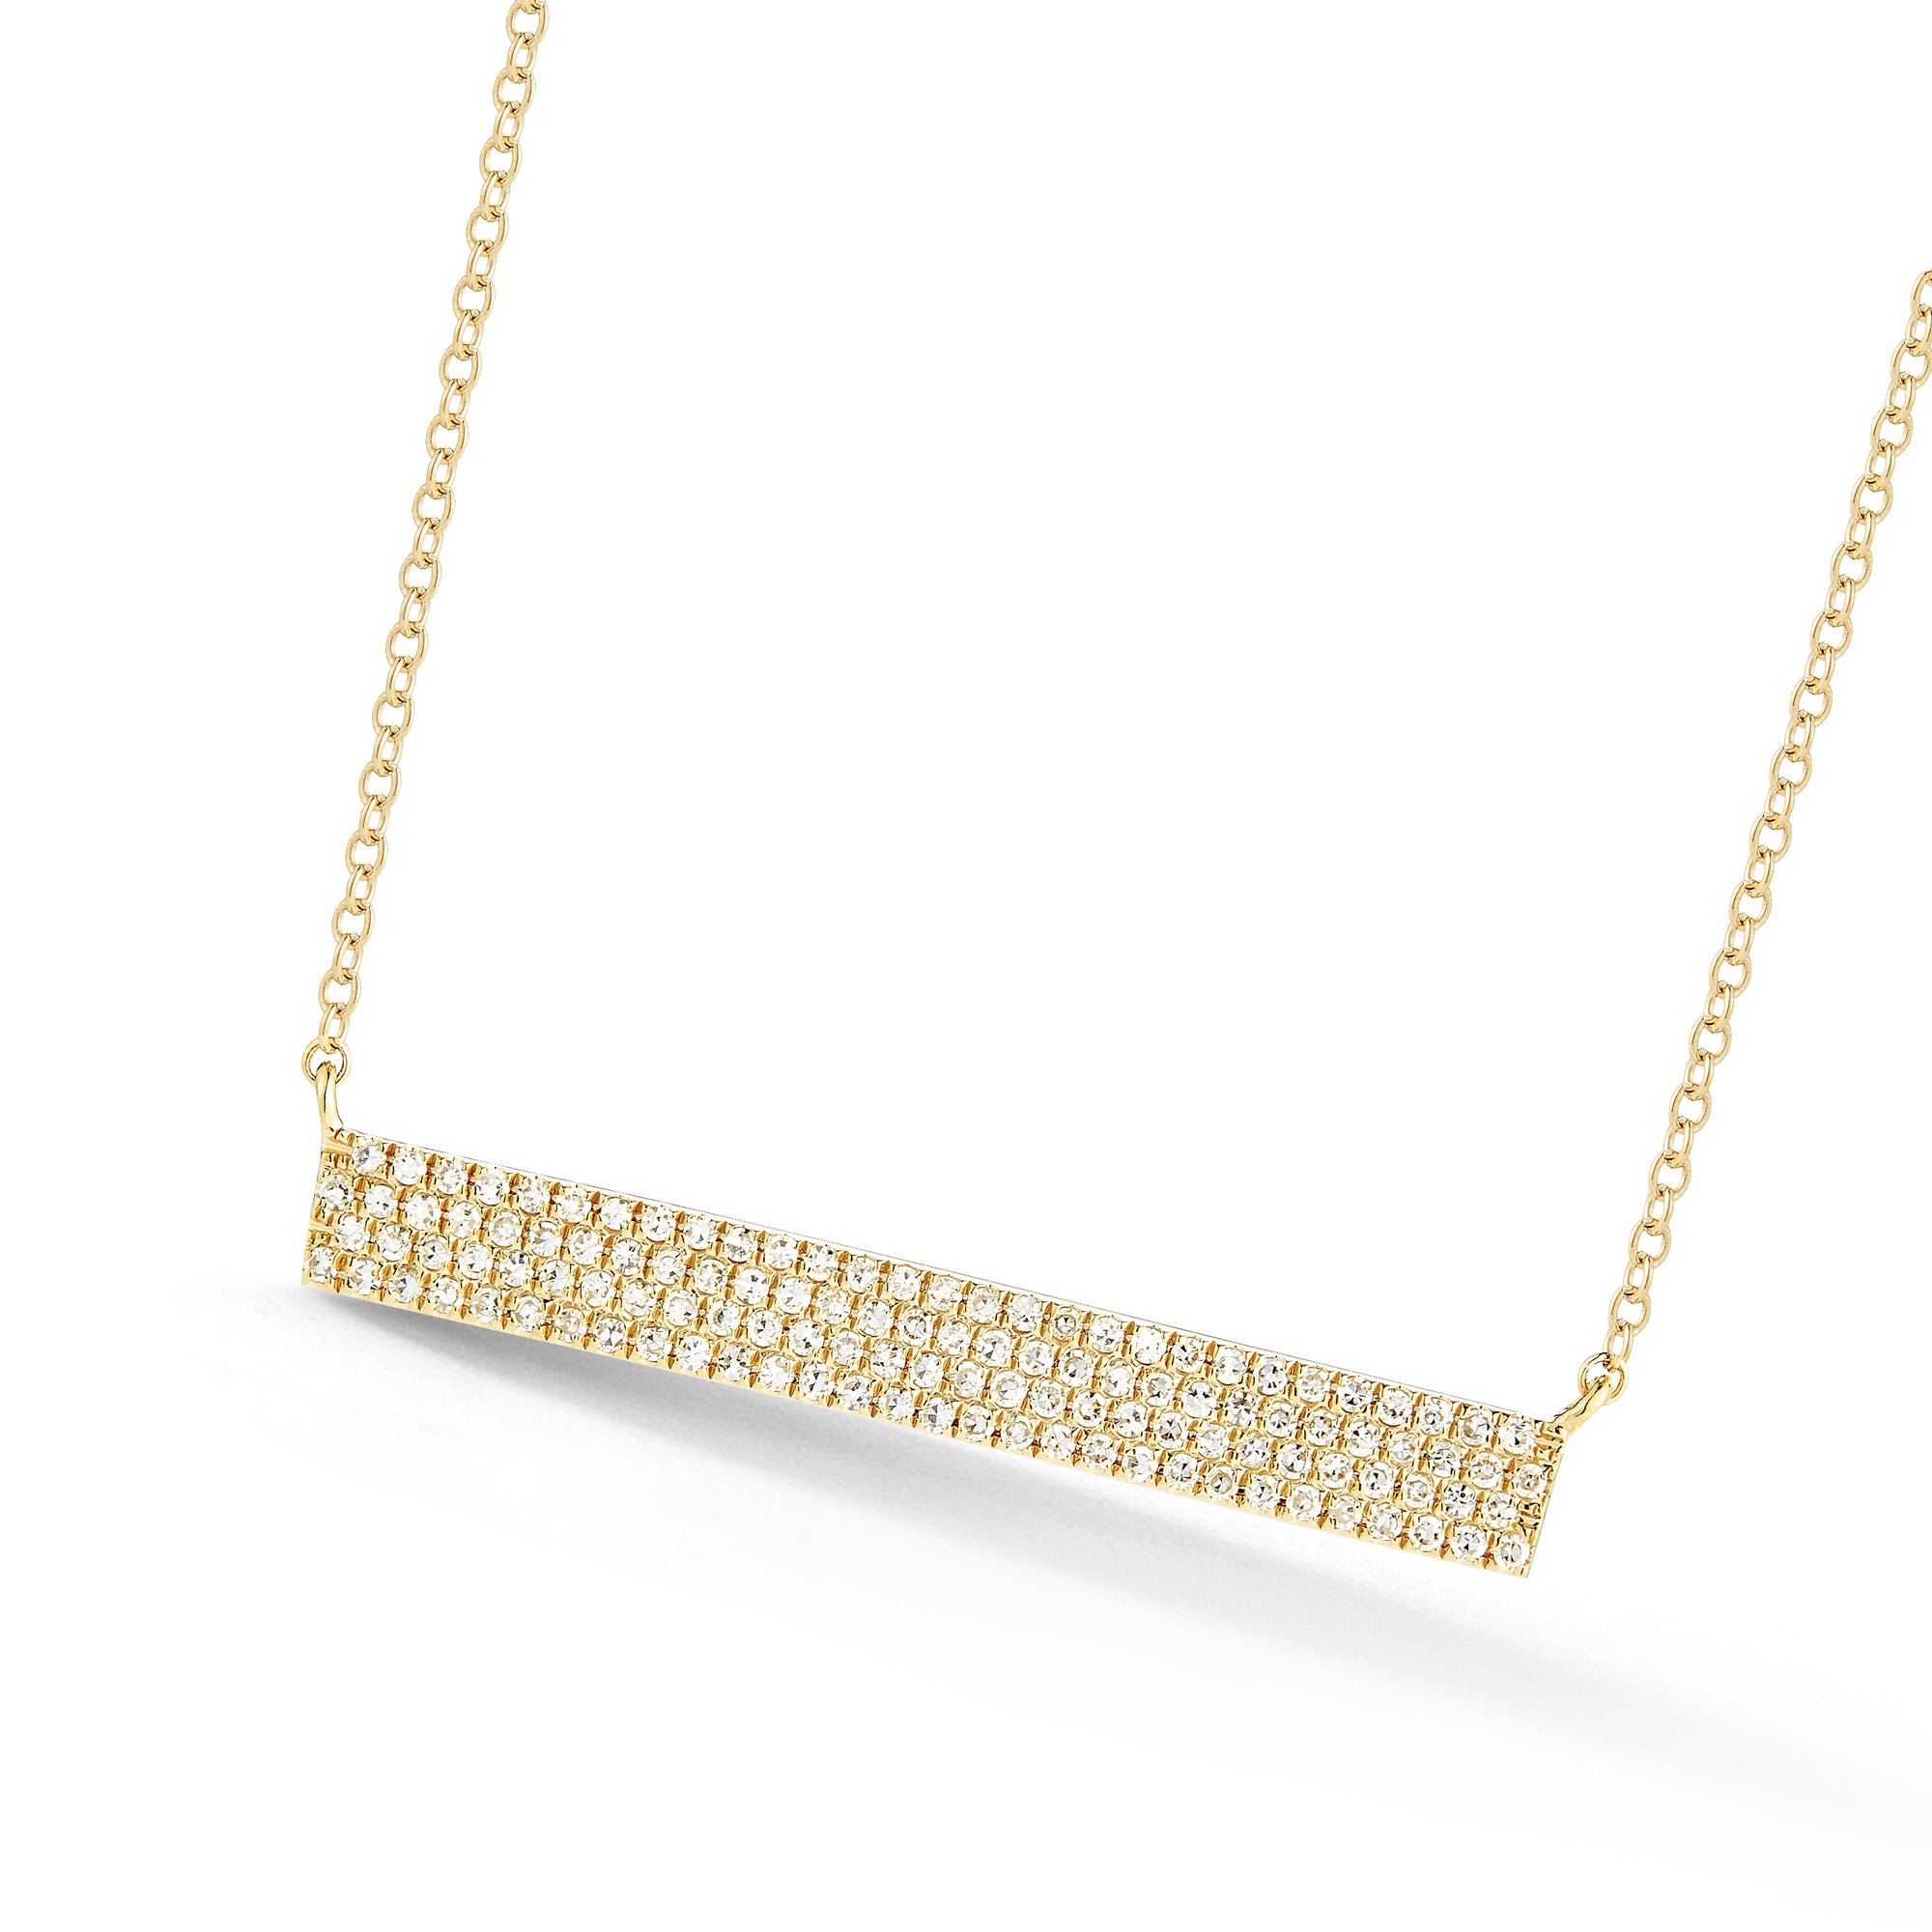 Pave Diamond Bar Necklace  -14K yellow gold weighing 2.22 grams  -118 round pave-set diamonds totaling 0.27 carats.